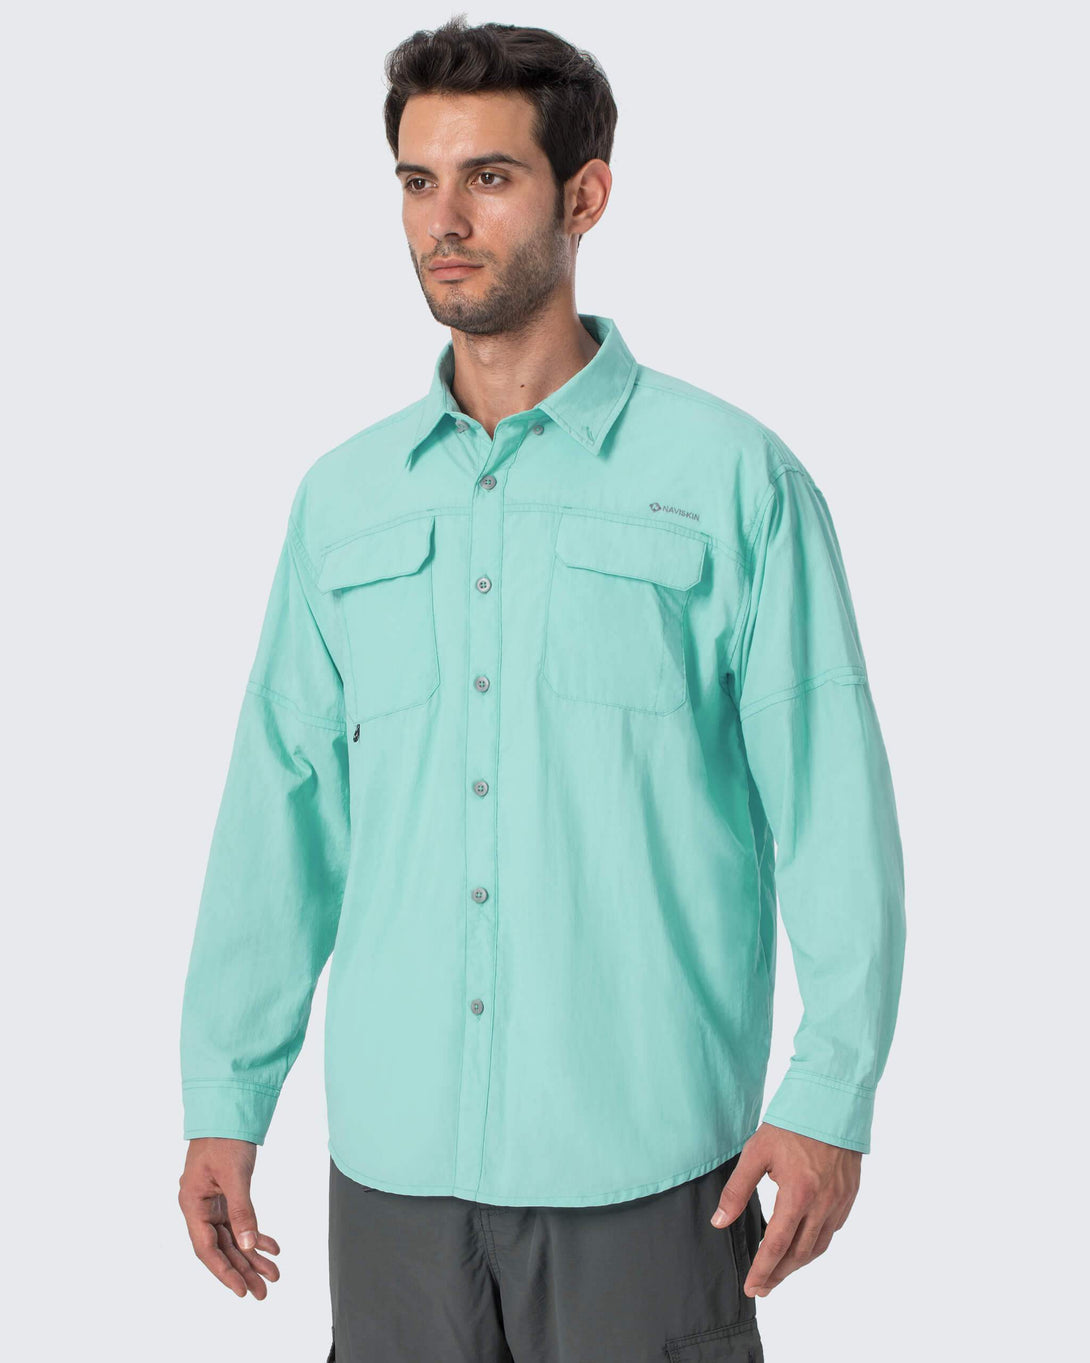 NAVISKIN Men's UPF 50+ Sun Protection Clothing Hiking Fishing Shirt Lightweight Quick Dry SPF Outdoor Long Sleeve Shirt, Light Green / XX-Large